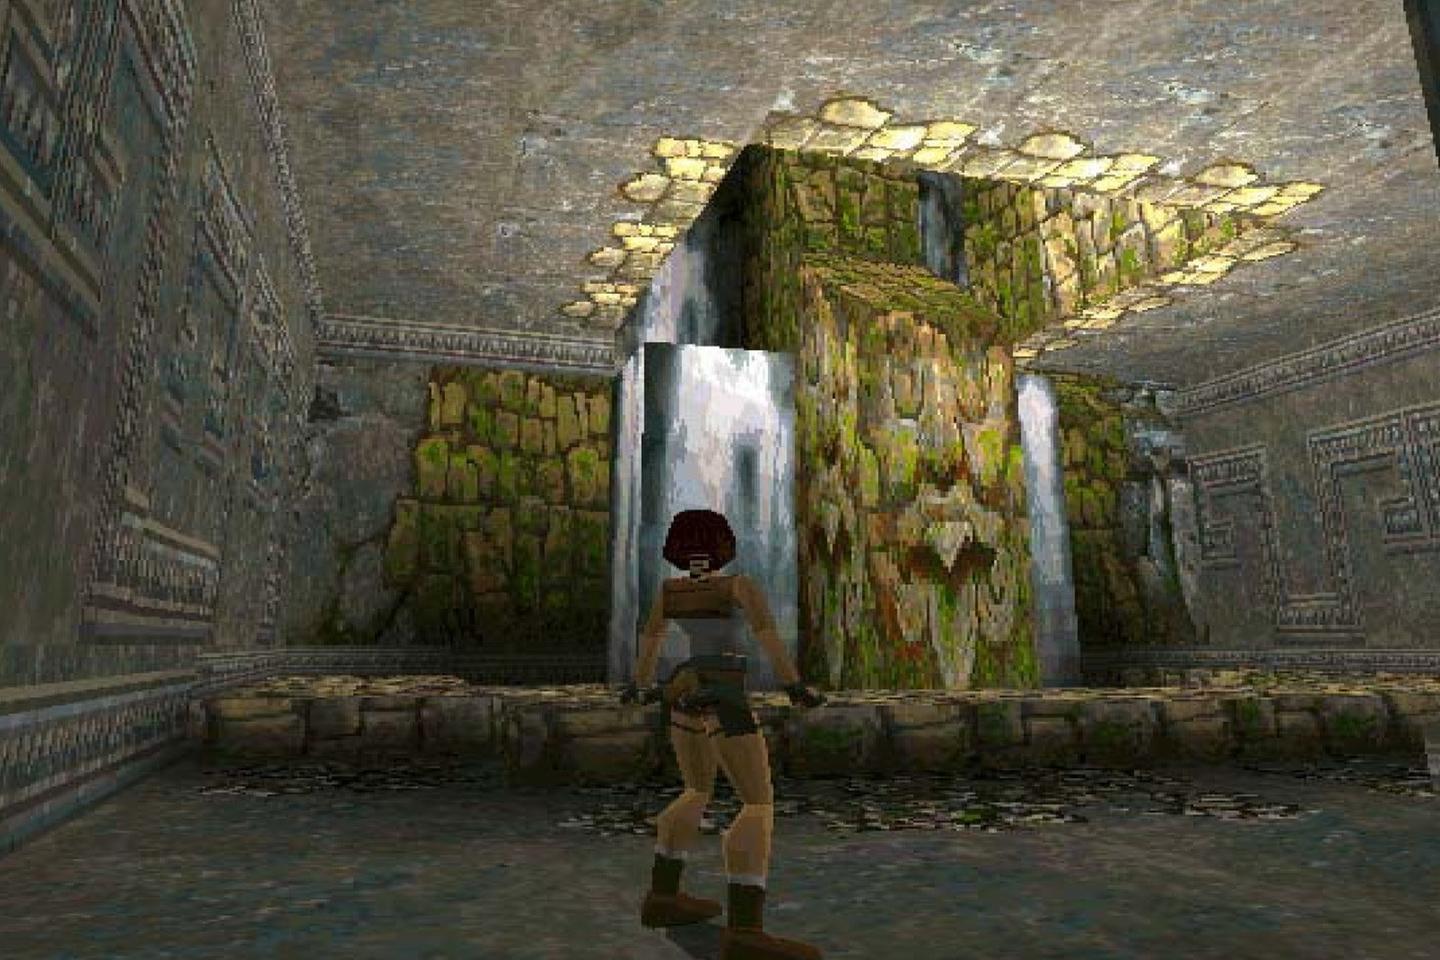 Lara looking at waterfalls inside tomb.